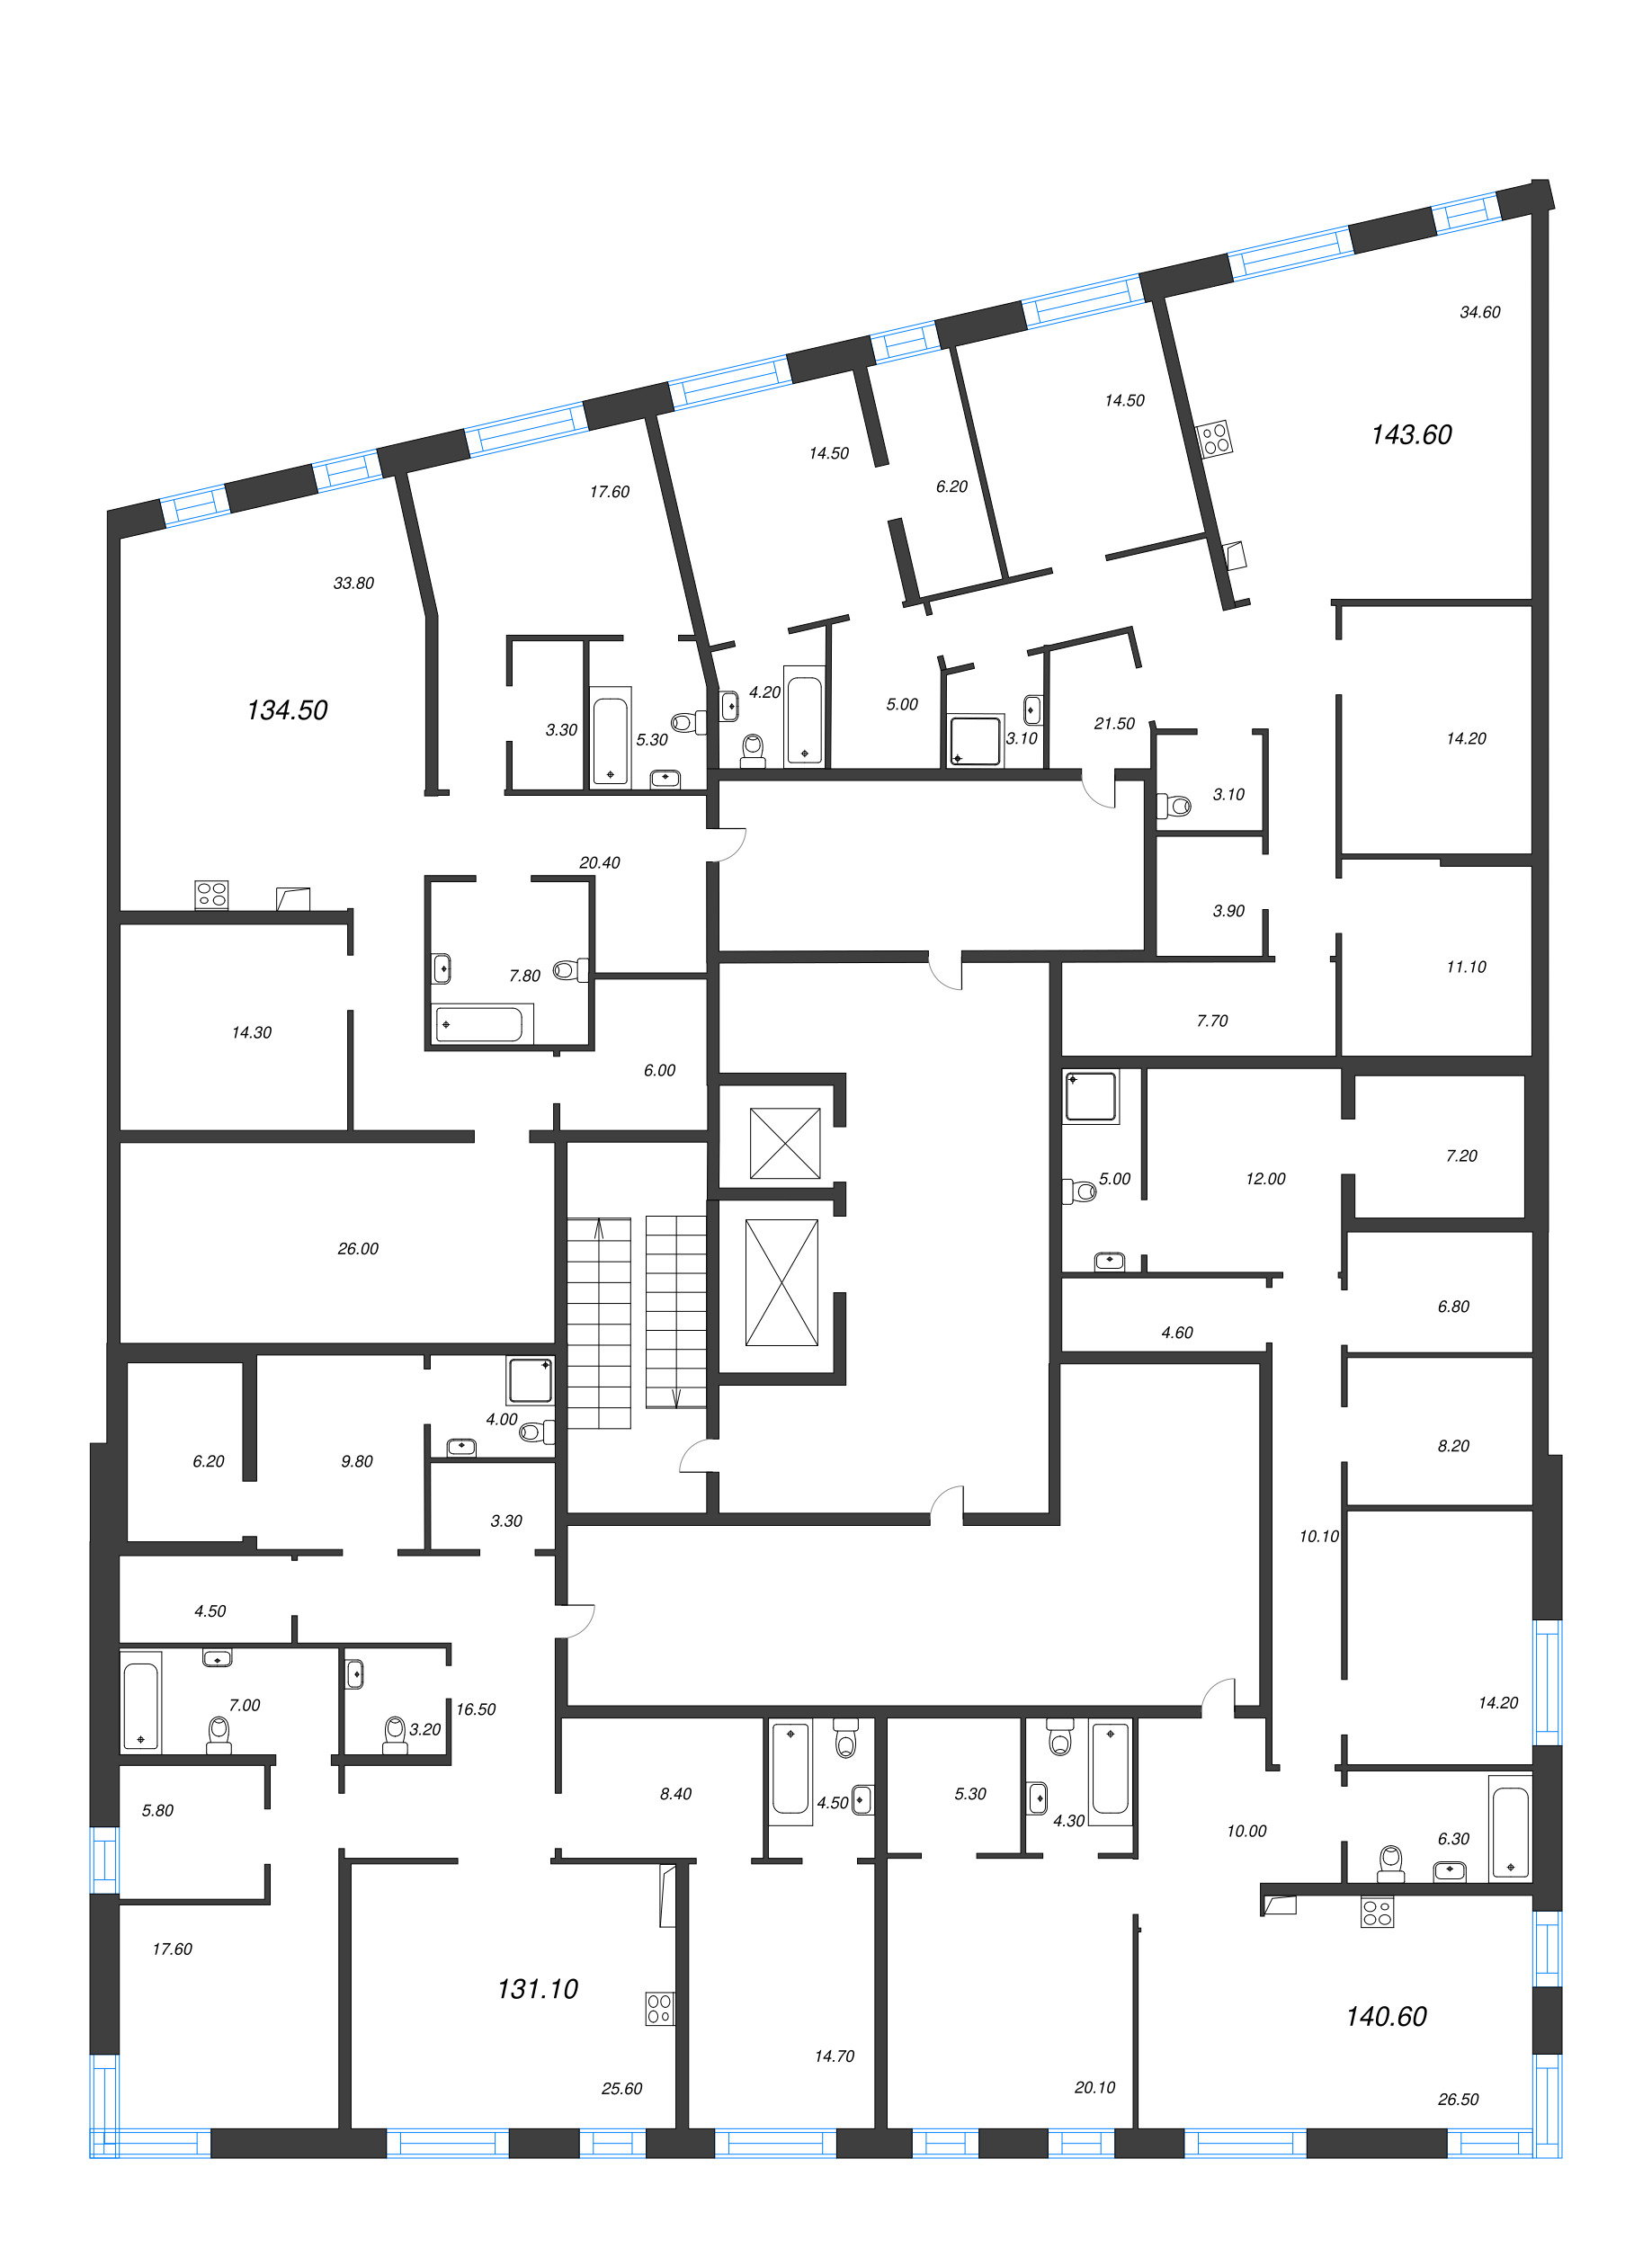 4-комнатная (Евро) квартира, 140.6 м² в ЖК "ЛДМ" - планировка этажа